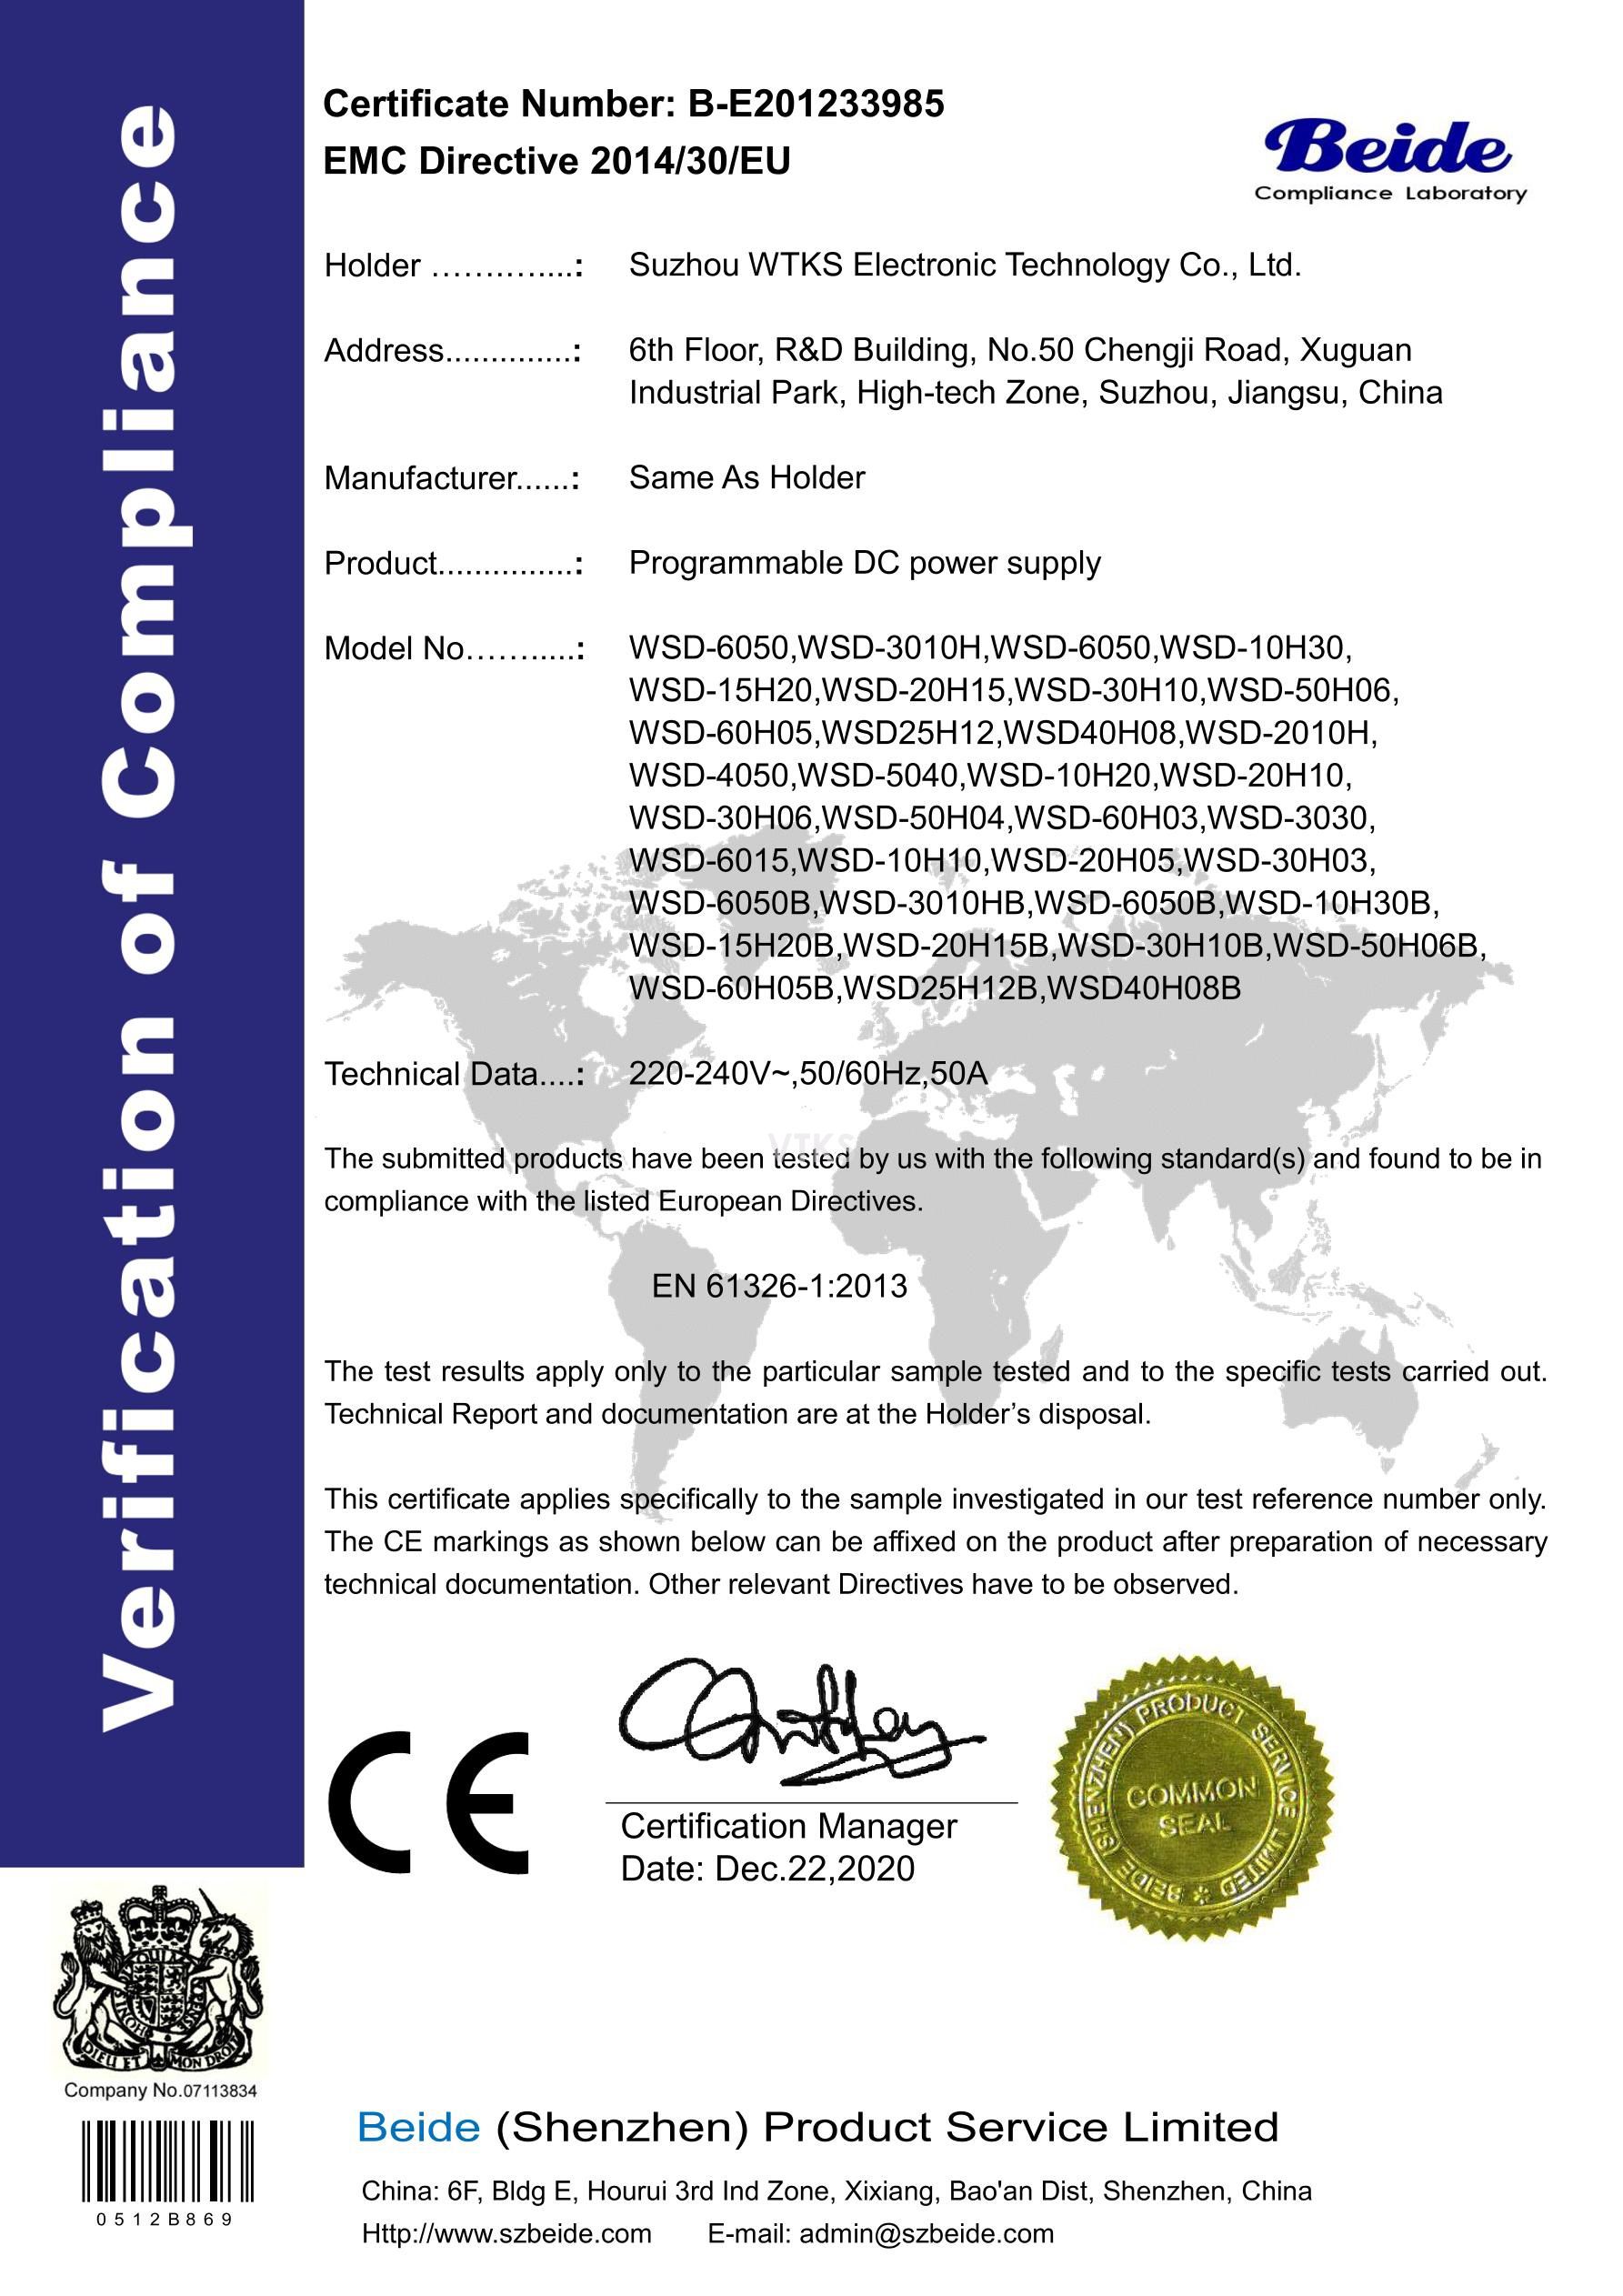 33985 EMC Certificate 韦特克斯 可编程直流电源.jpg